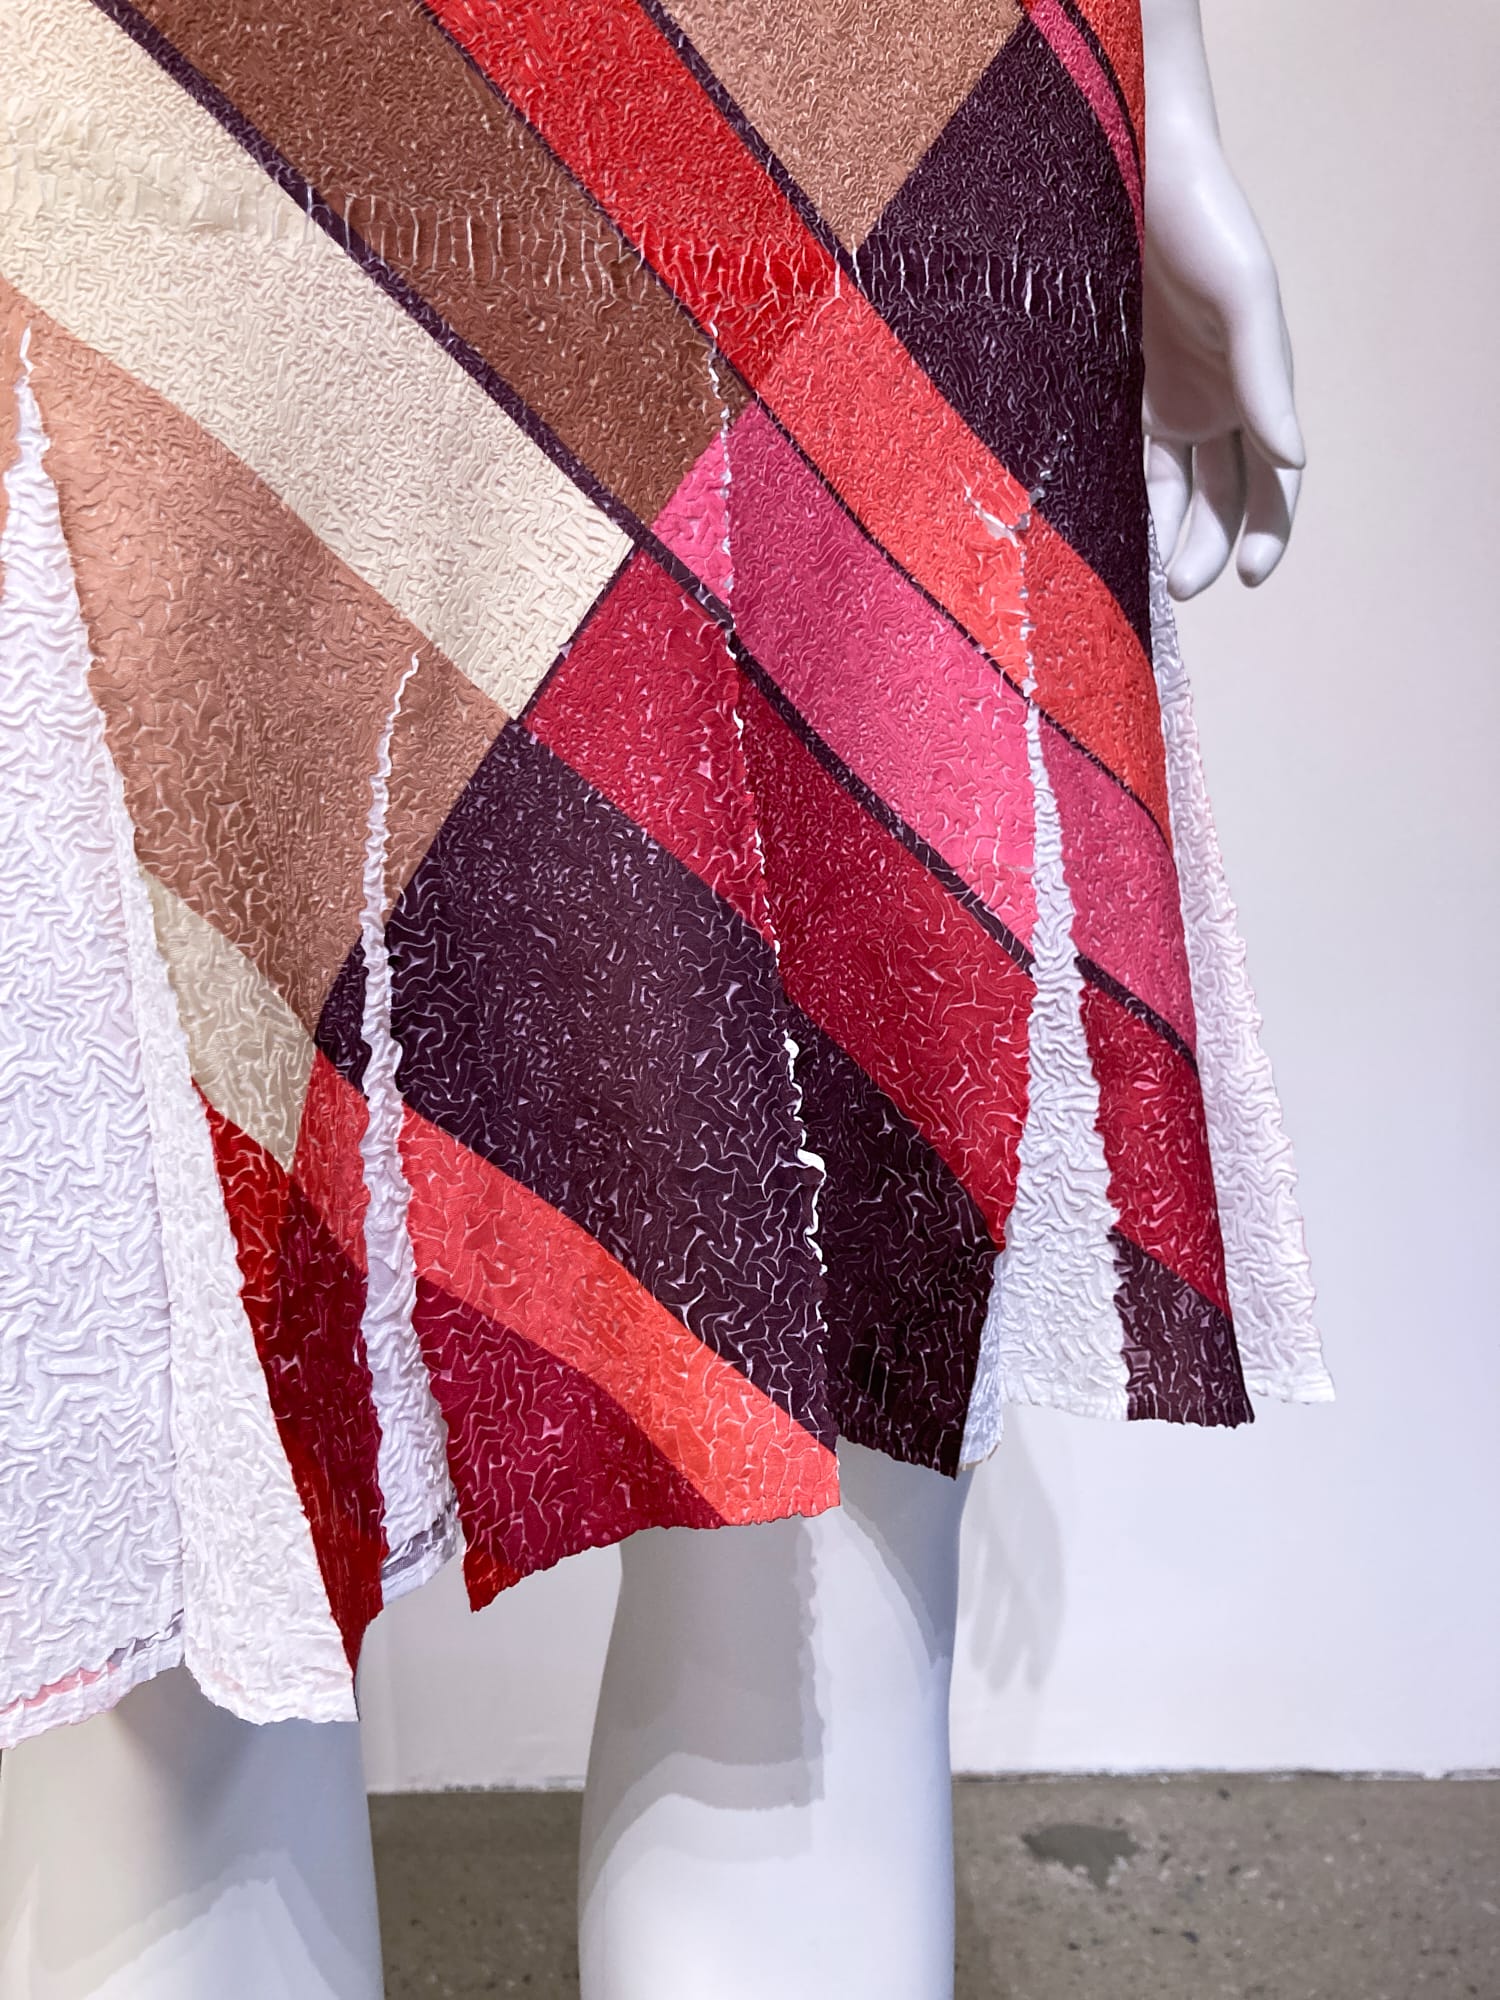 Wrinqle Inoue Pleats multicolour rectangle pattern wrinkled poly dress